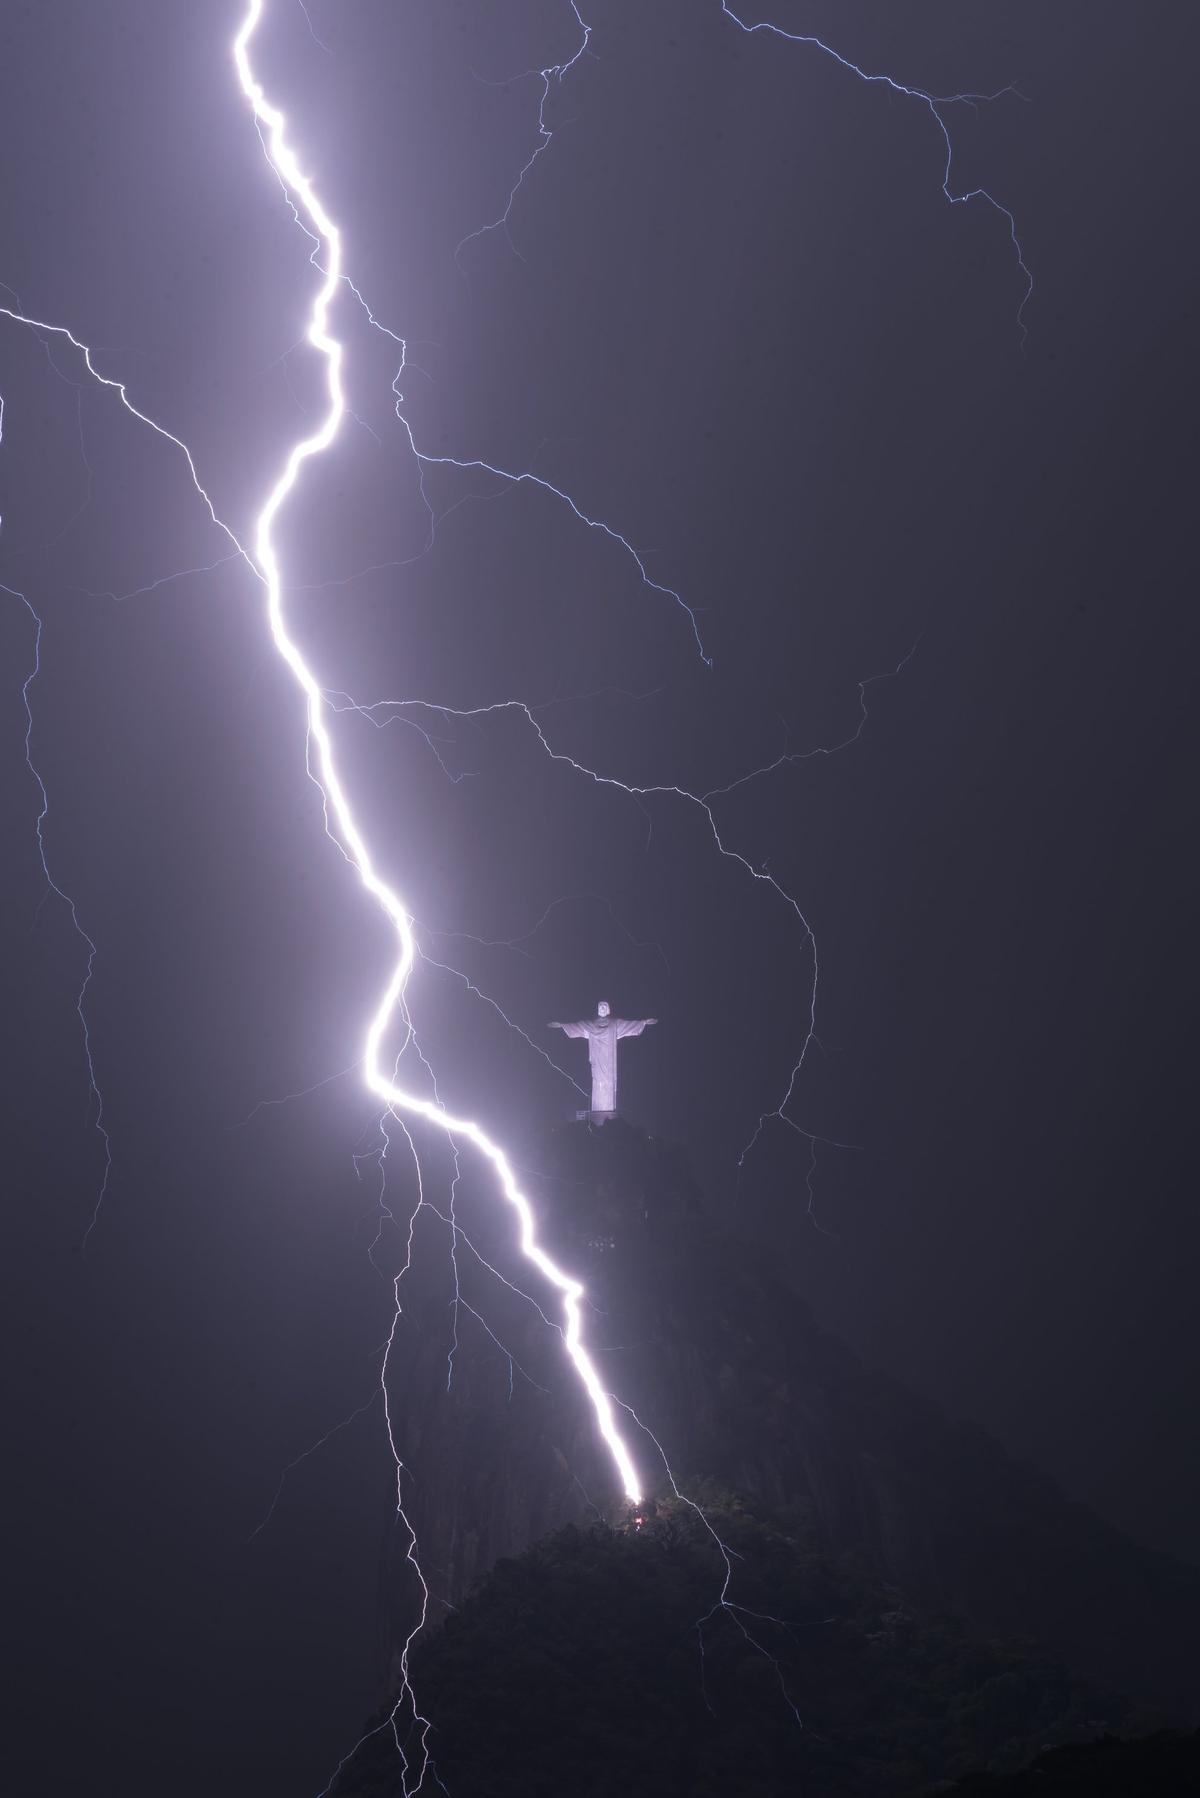 "Divine Power" by Fernando Braga was the Public Vote Winner. (Courtesy of Fernando Braga via Weather Photographer of the Year)